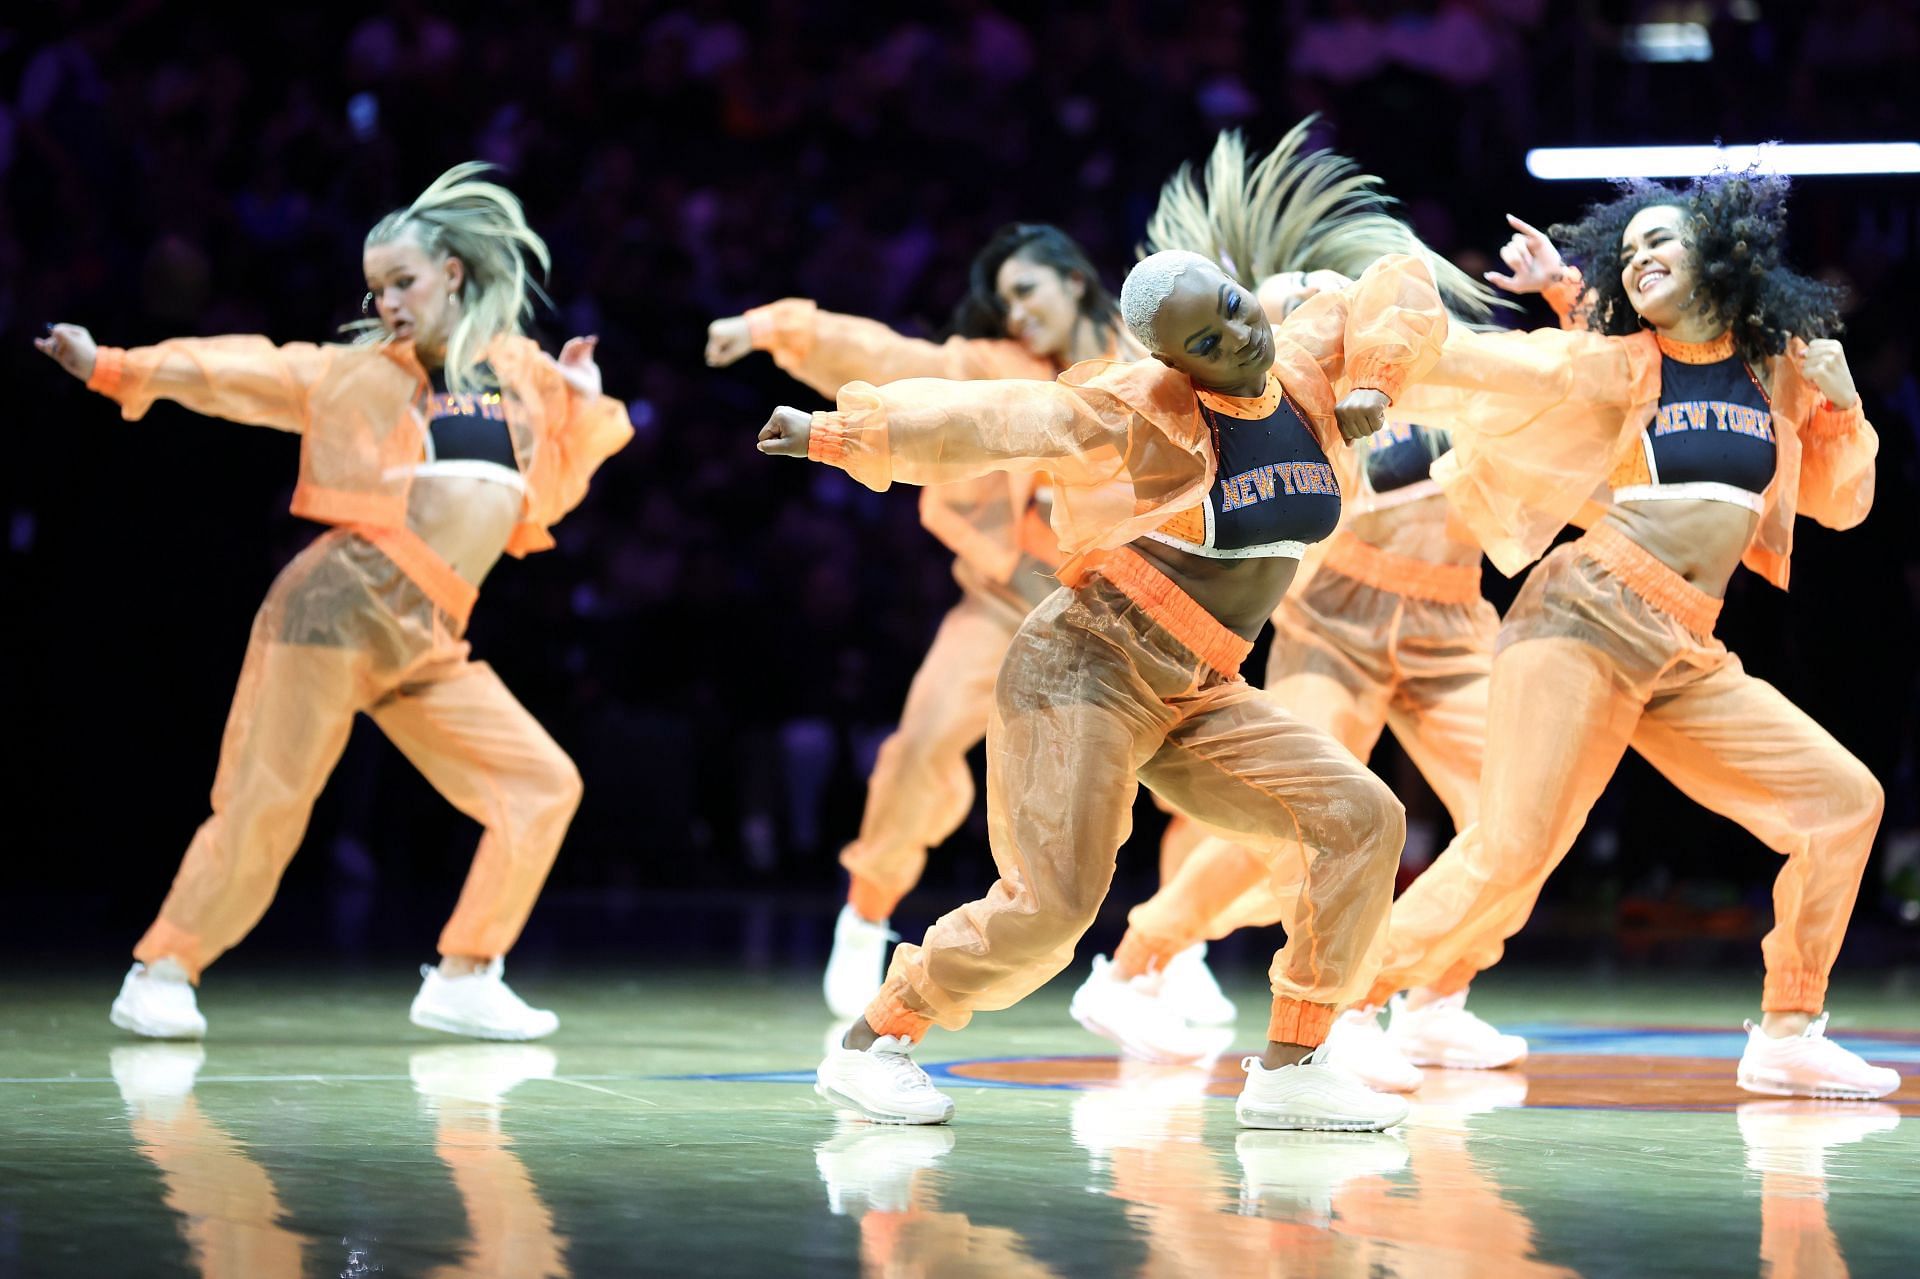 Warriors Dance Team (Golden State Warriors Dancers) - NBA Dancers -  1/23/2022 dance performance 